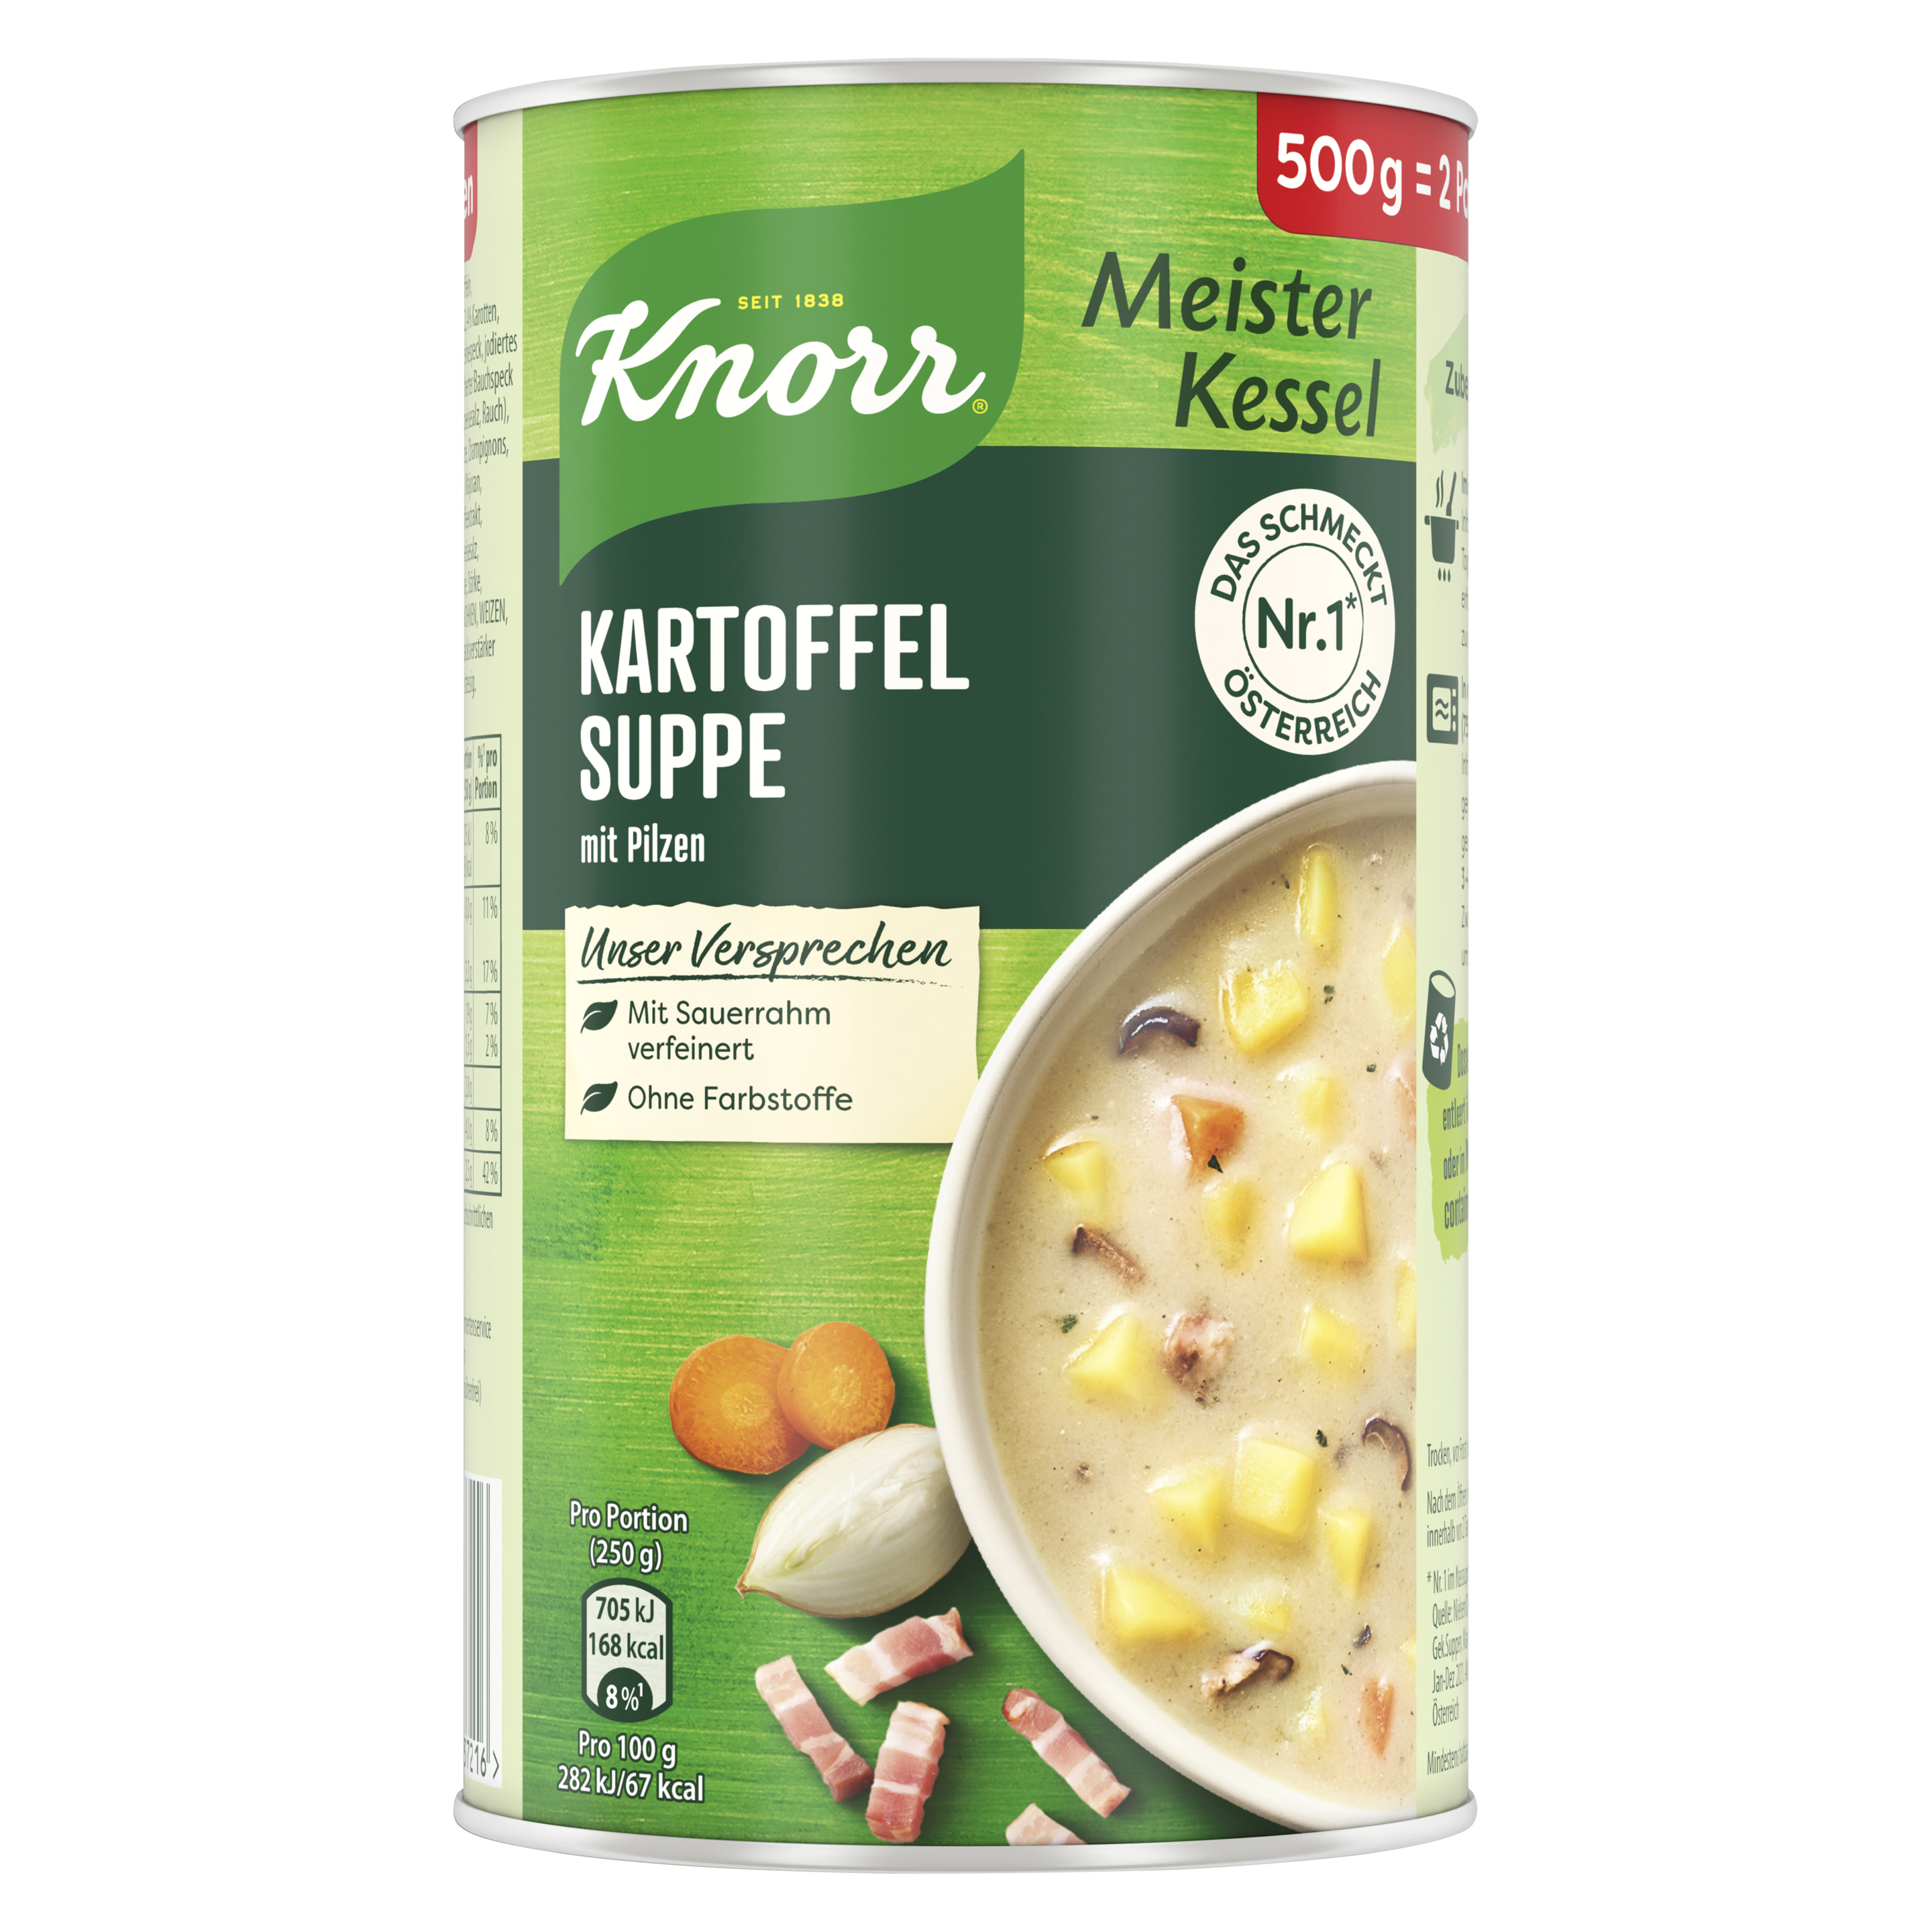 Knorr Meisterkessel Kartoffel Suppe 2 Teller